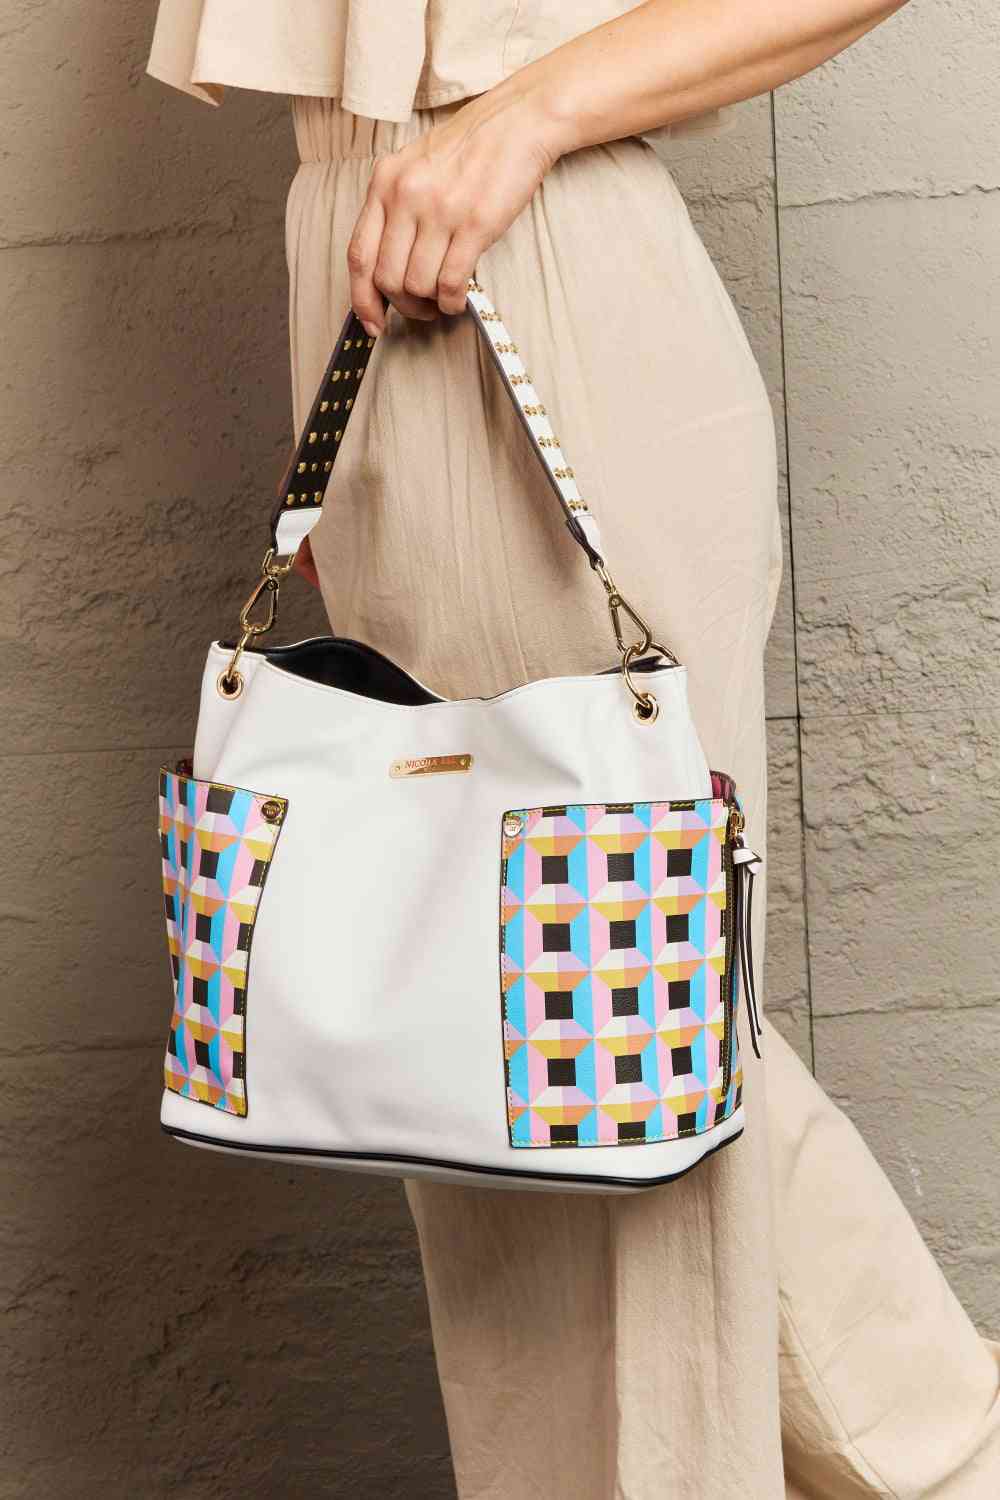 Tan Nicole Lee USA Quihn 3-Piece Handbag Set Sentient Beauty Fashions *Accessories